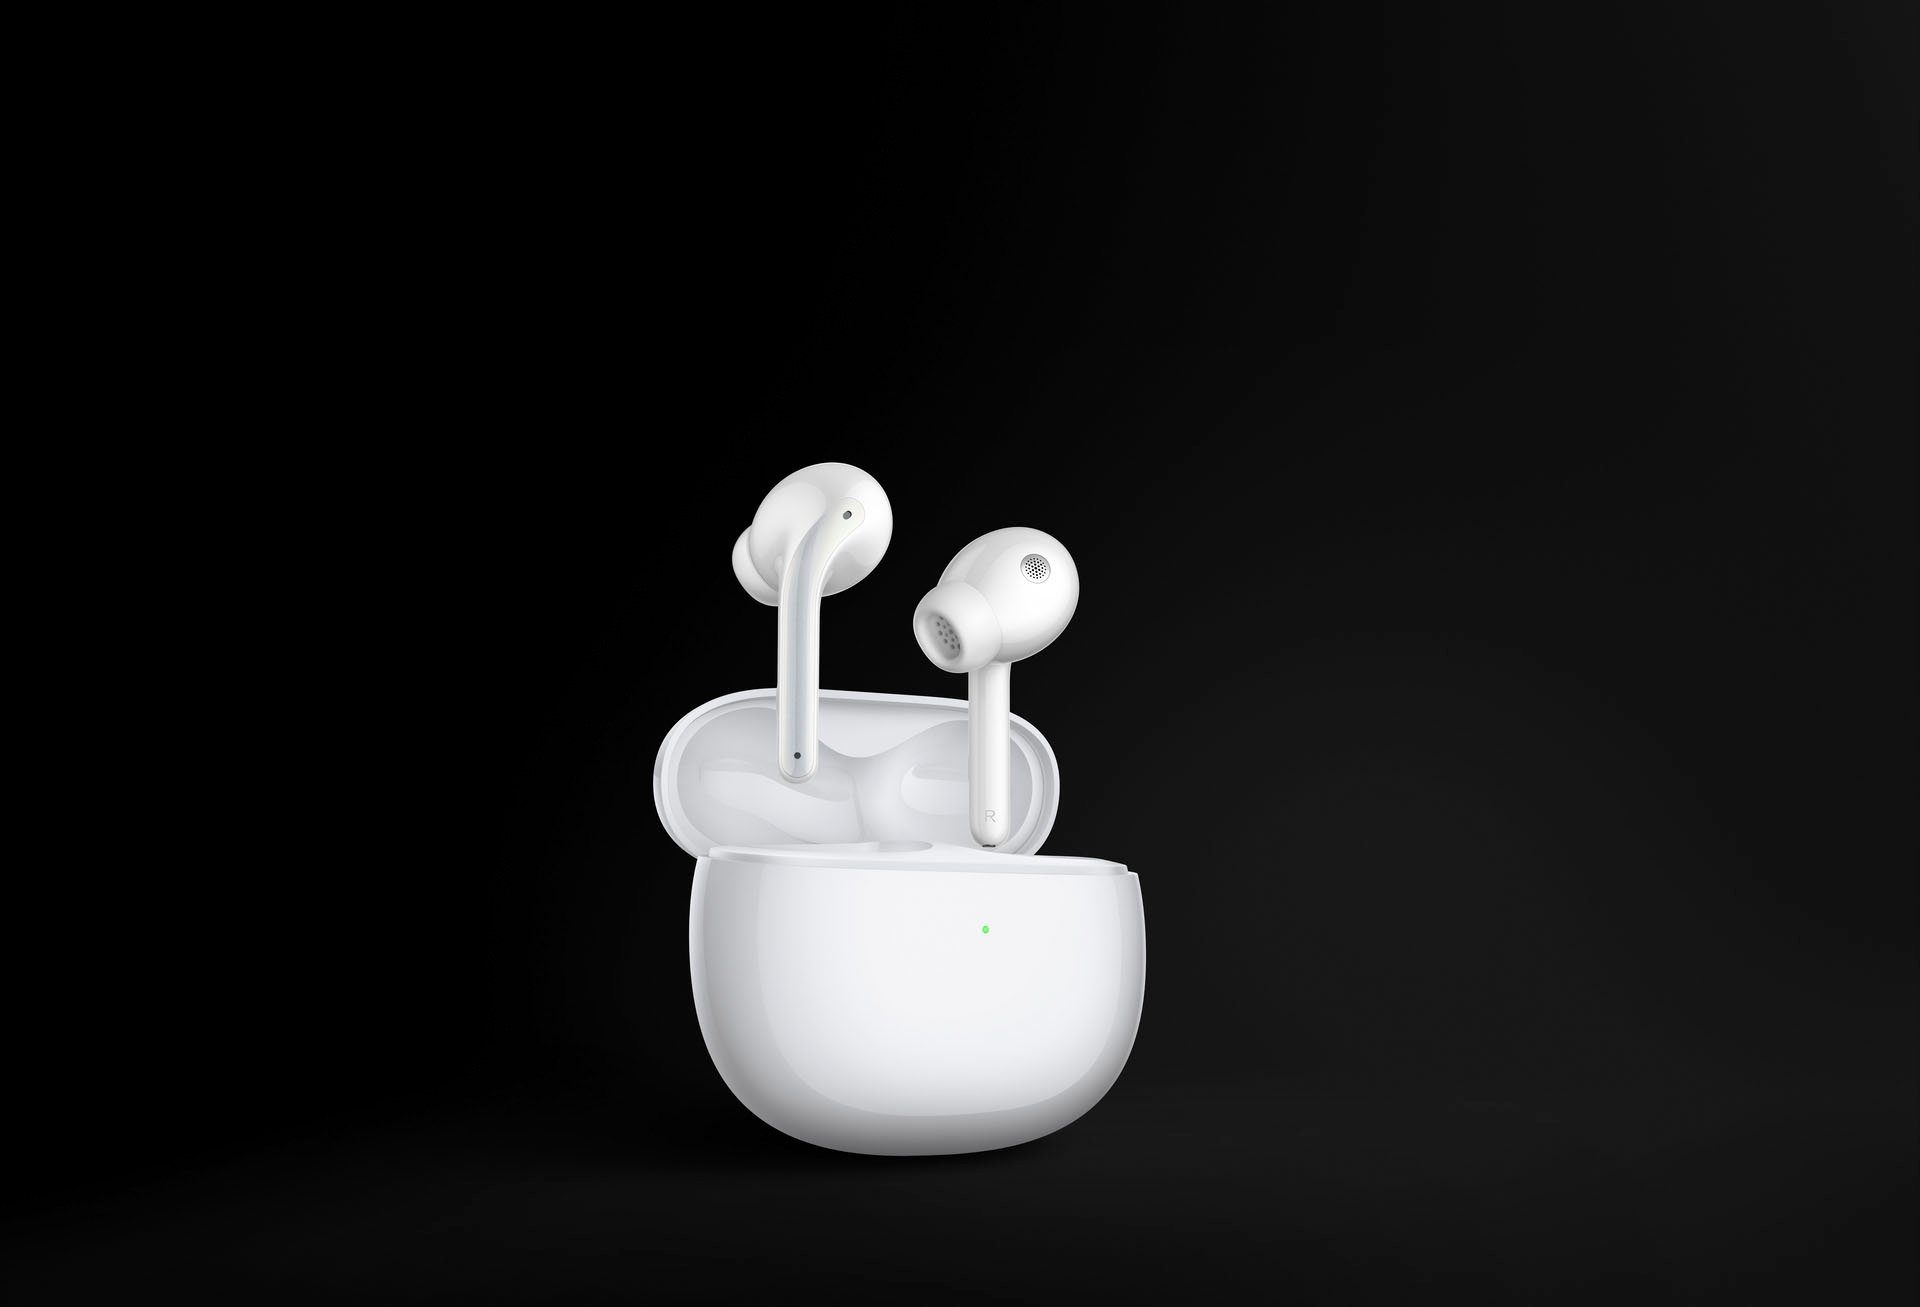 Xiaomi (Active weiß Bluetooth) Cancelling Noise Buds (ANC), Freisprechfunktion, A2DP Wireless-Headset 3